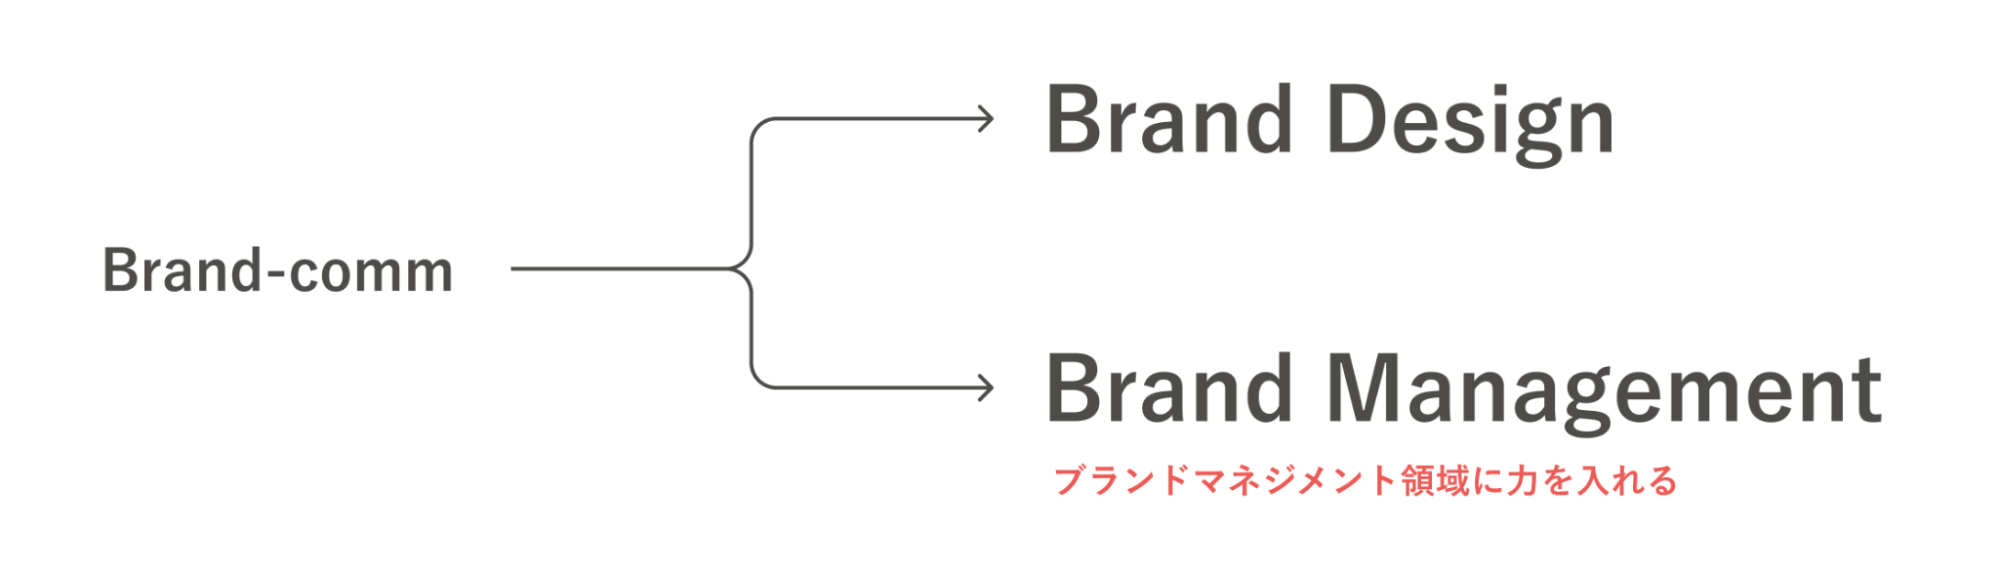 Brand-commユニットが2つに分かれたことを示す図。Brand DesignとBrand Managementにユニットを分割。ブランドマネジメント領域に力を入れる。